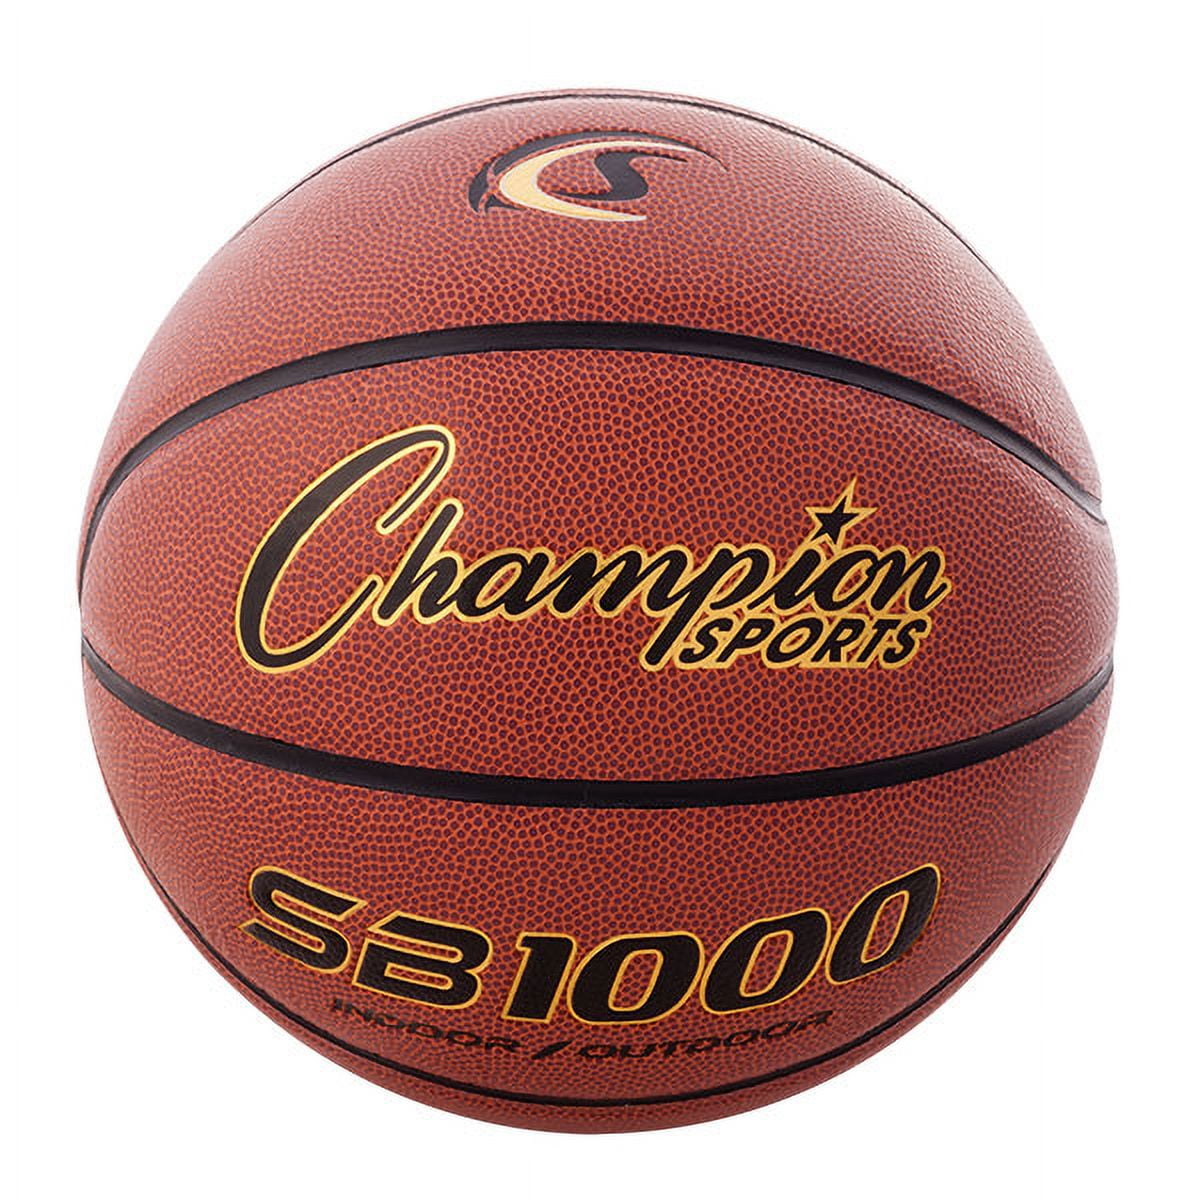 Picture of Champion Sports SB1000 29.5 in. Composite Basketballs, Orange